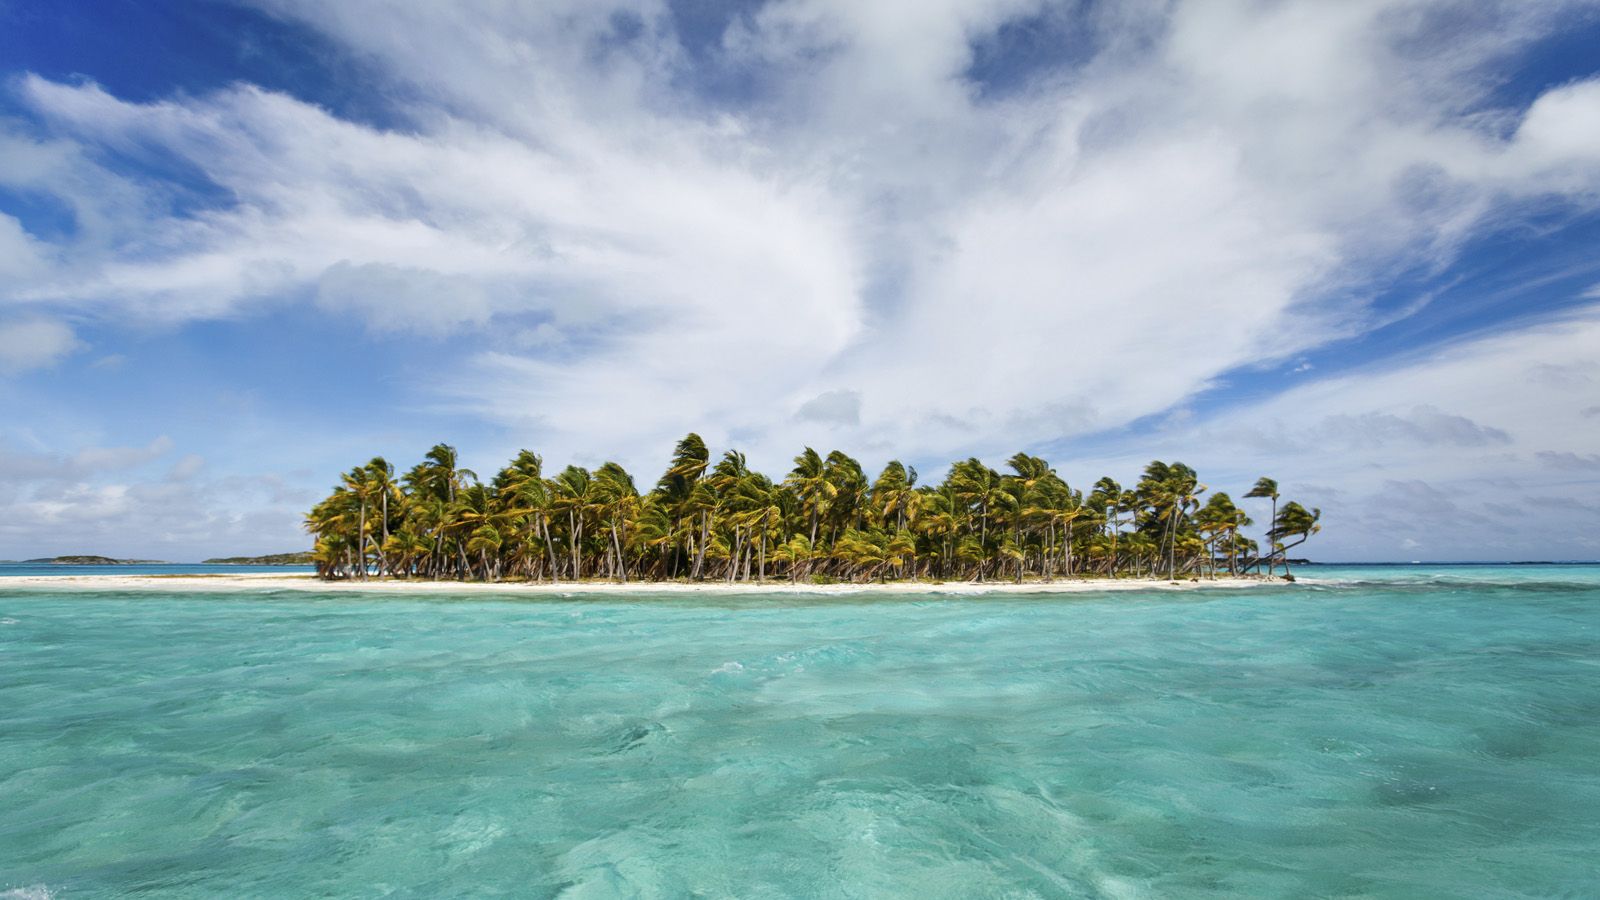 An island in the Exumas archipelago of the Bahamas